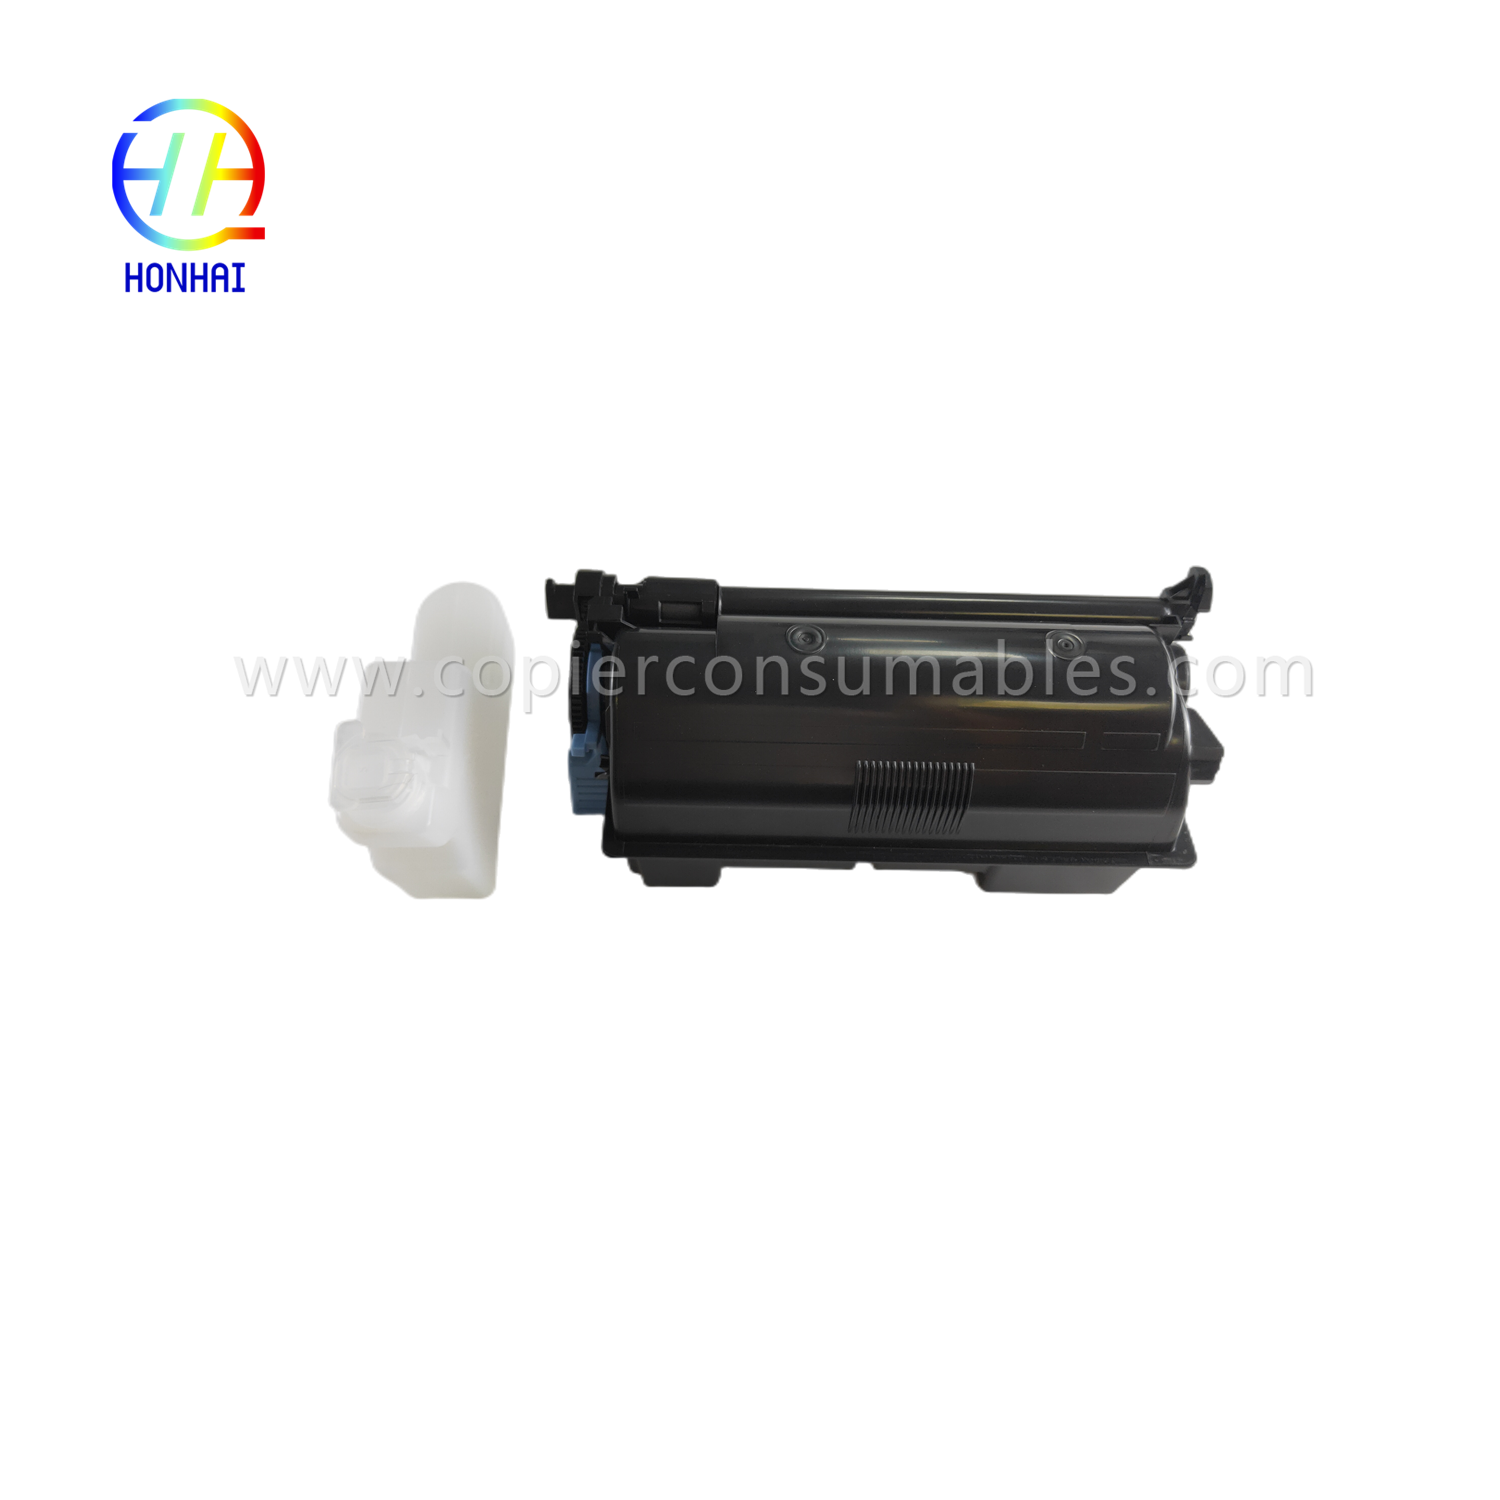 Toner Cartridge for Ricoh MP501 MP601 SP 5300 SP 5310